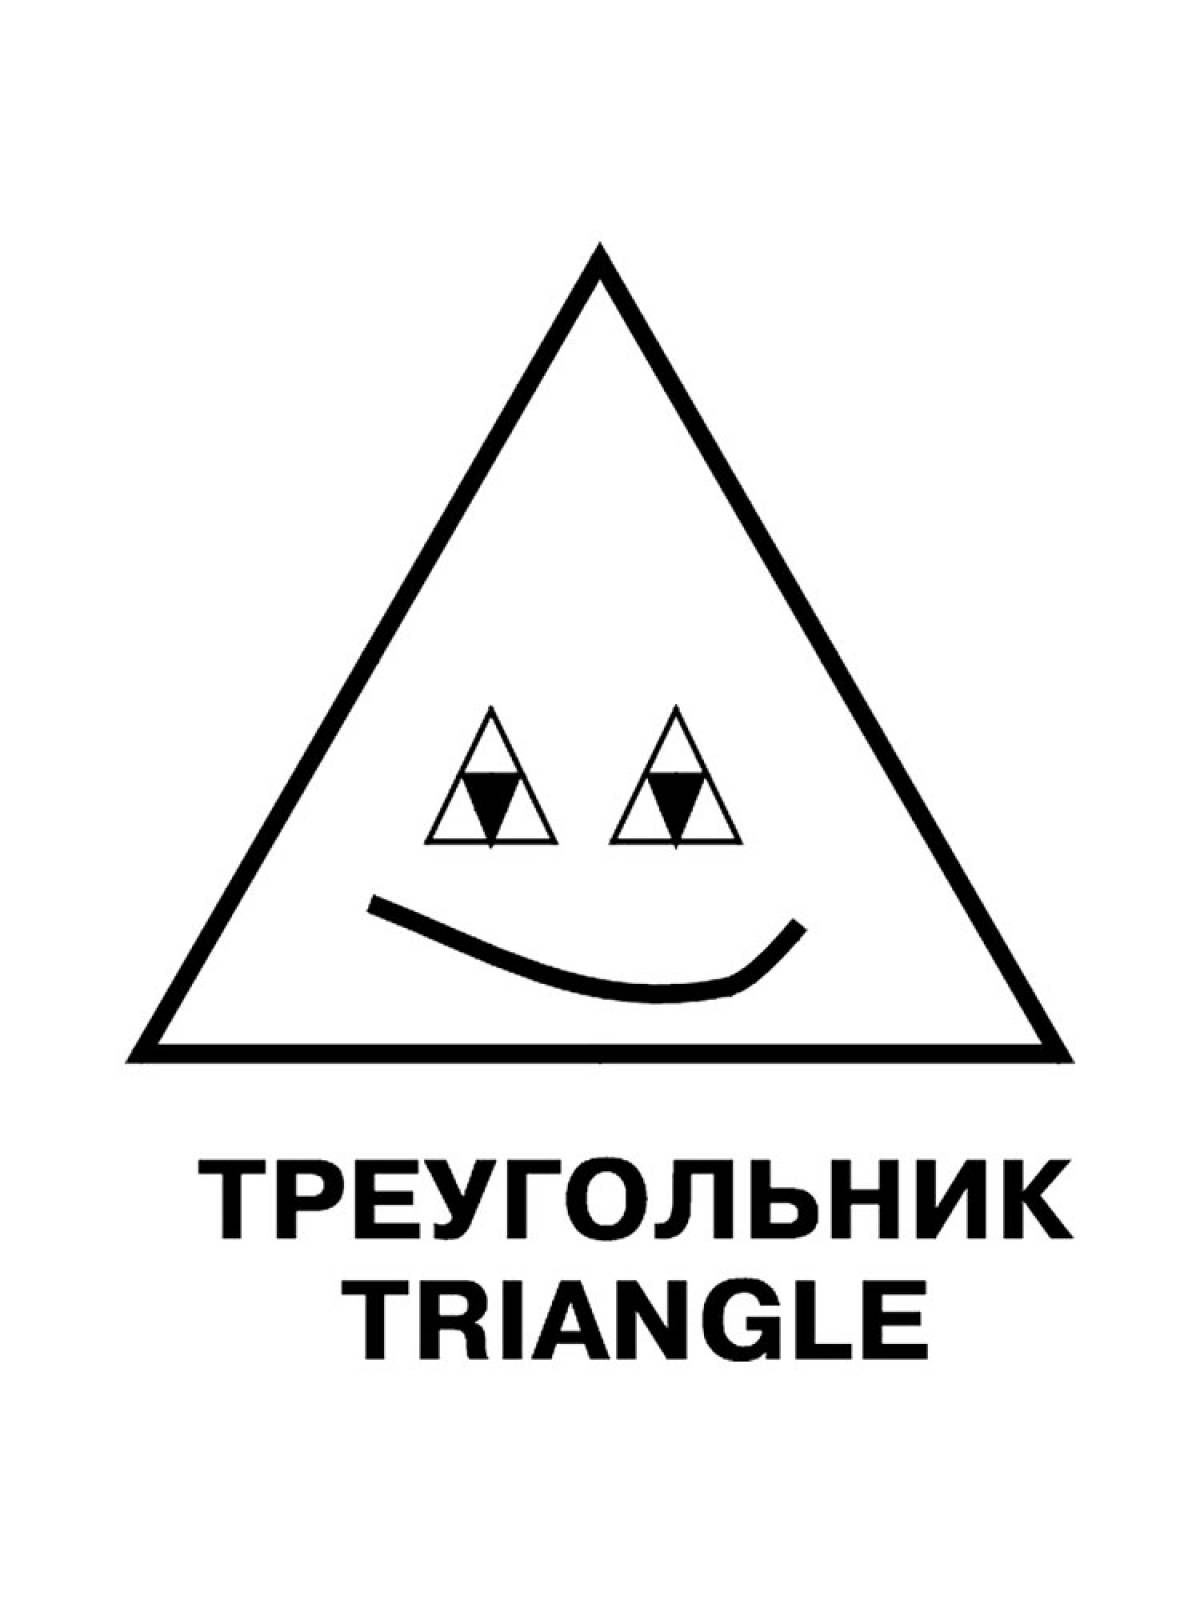 Photo Educational, Triangle #2